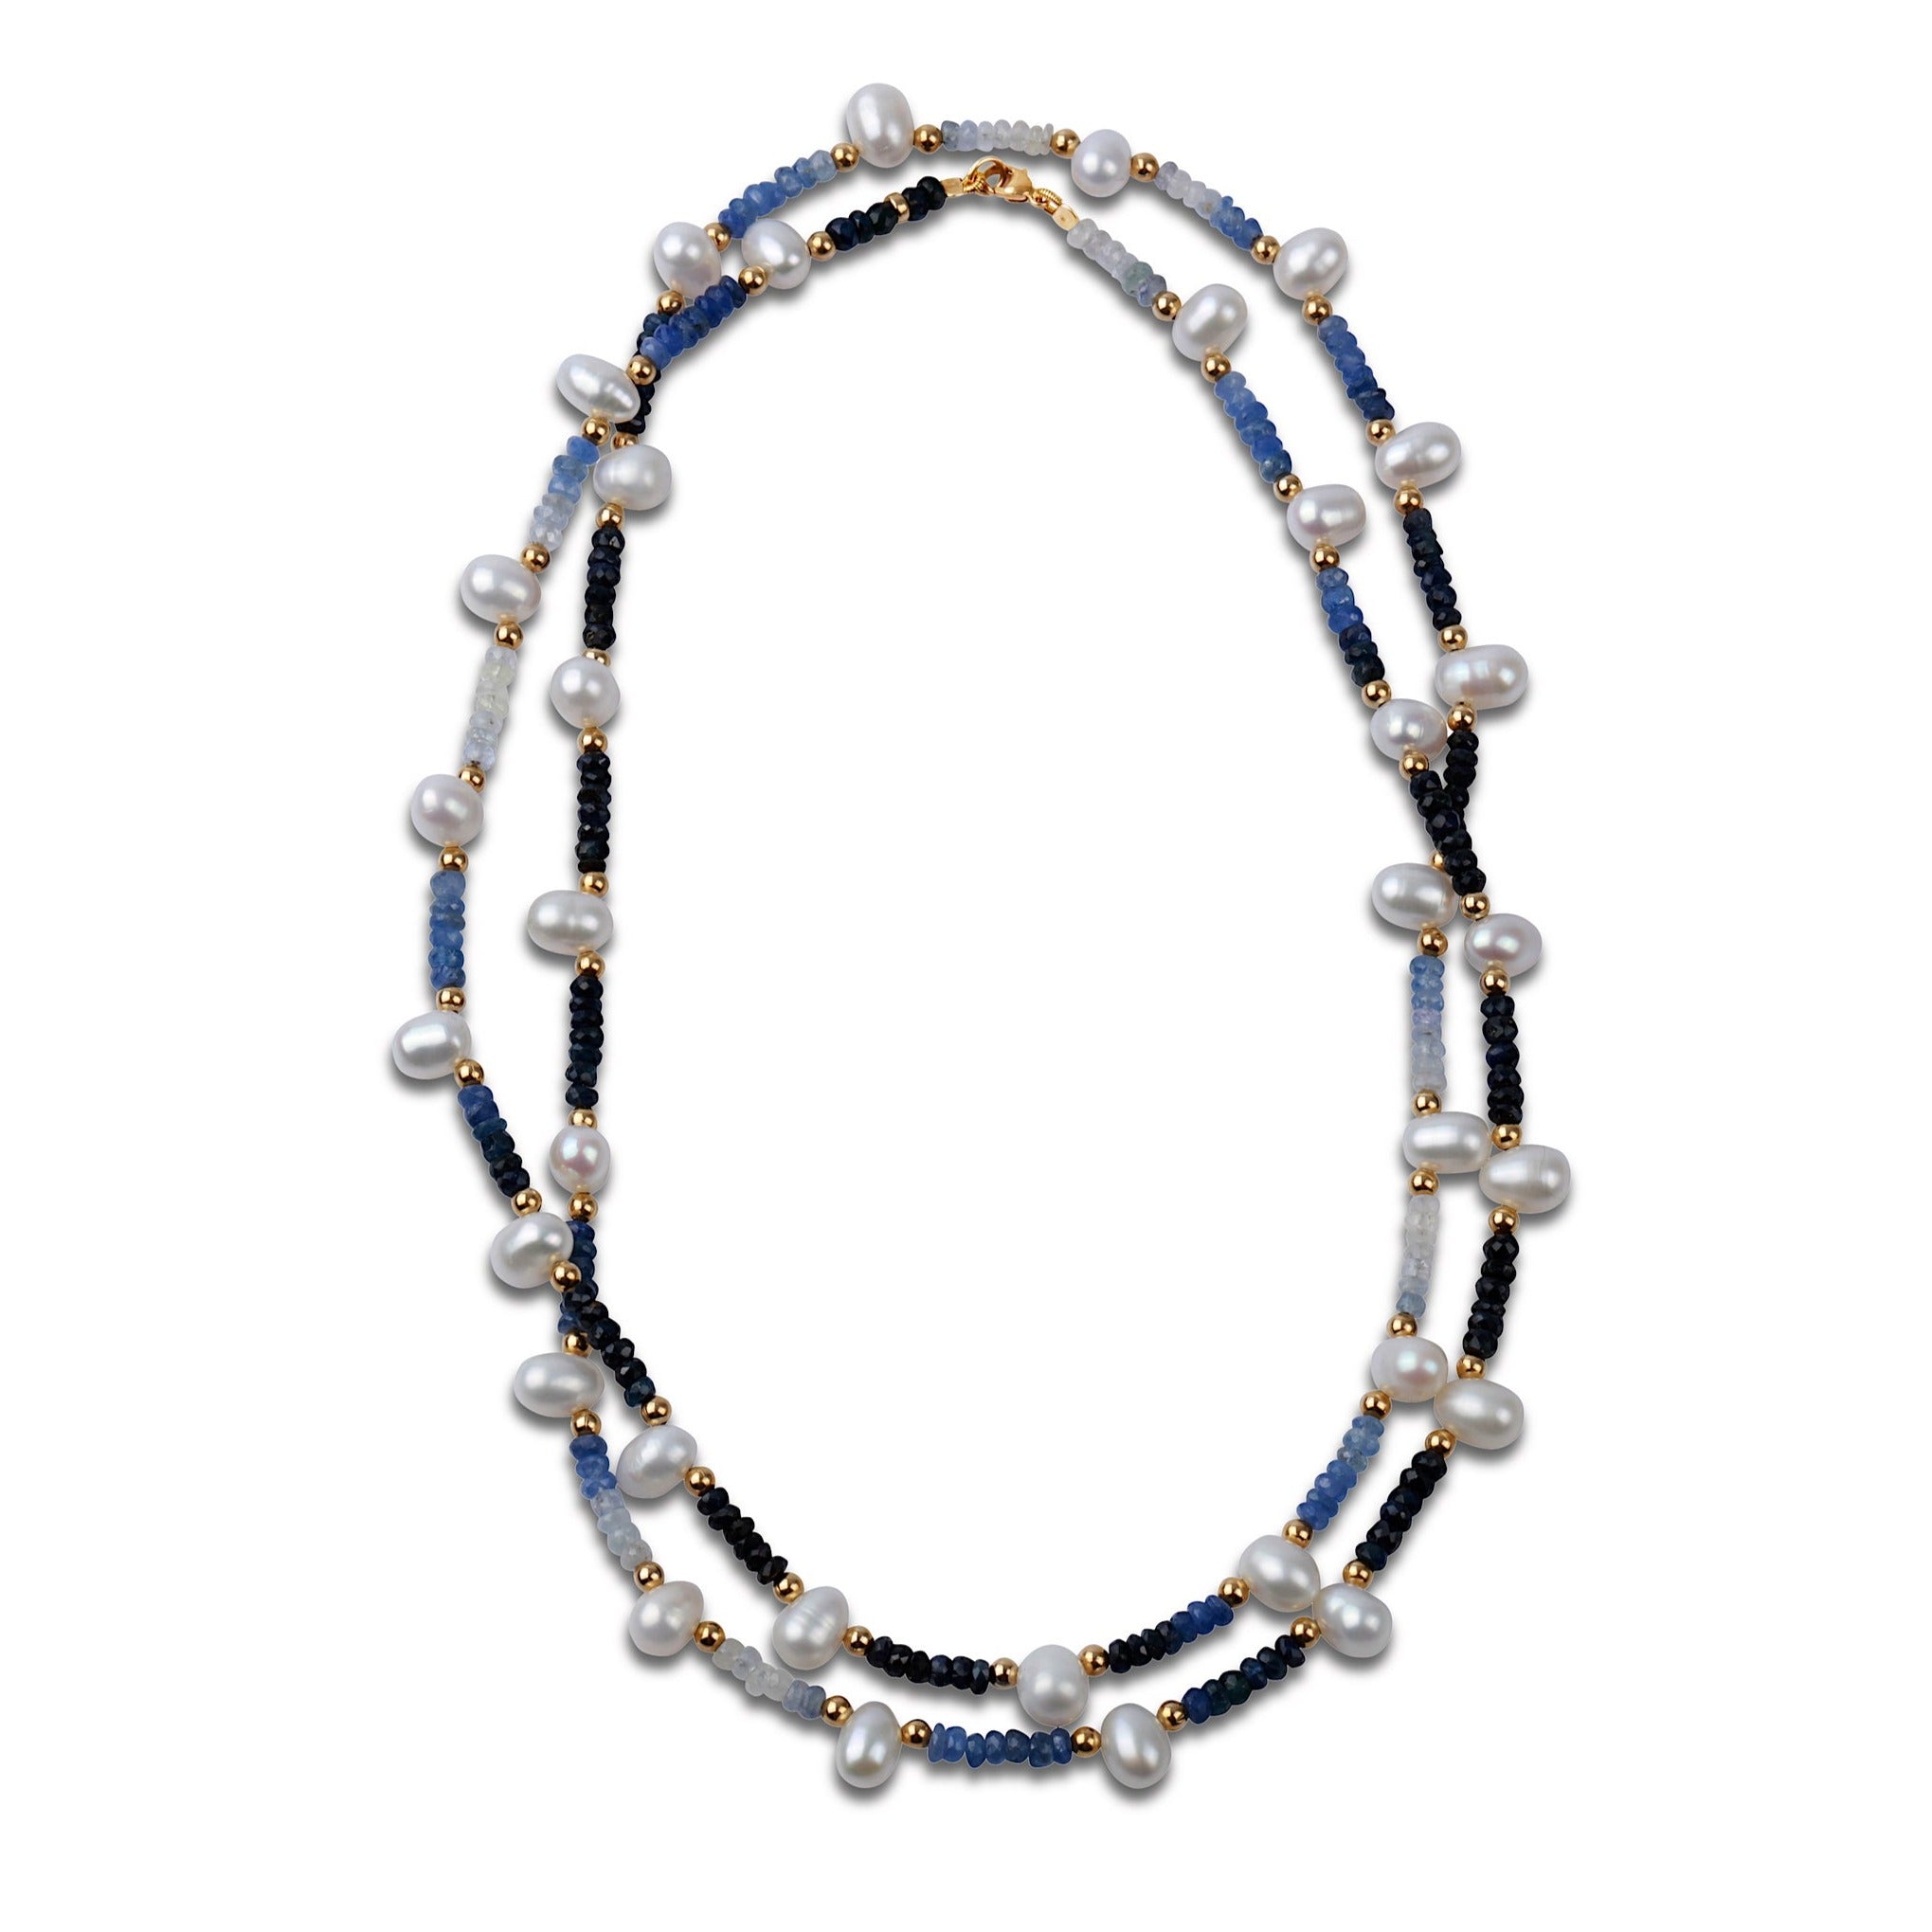 Buy Jasmine Kundan and Pearl Long Necklace online from Karat Cart